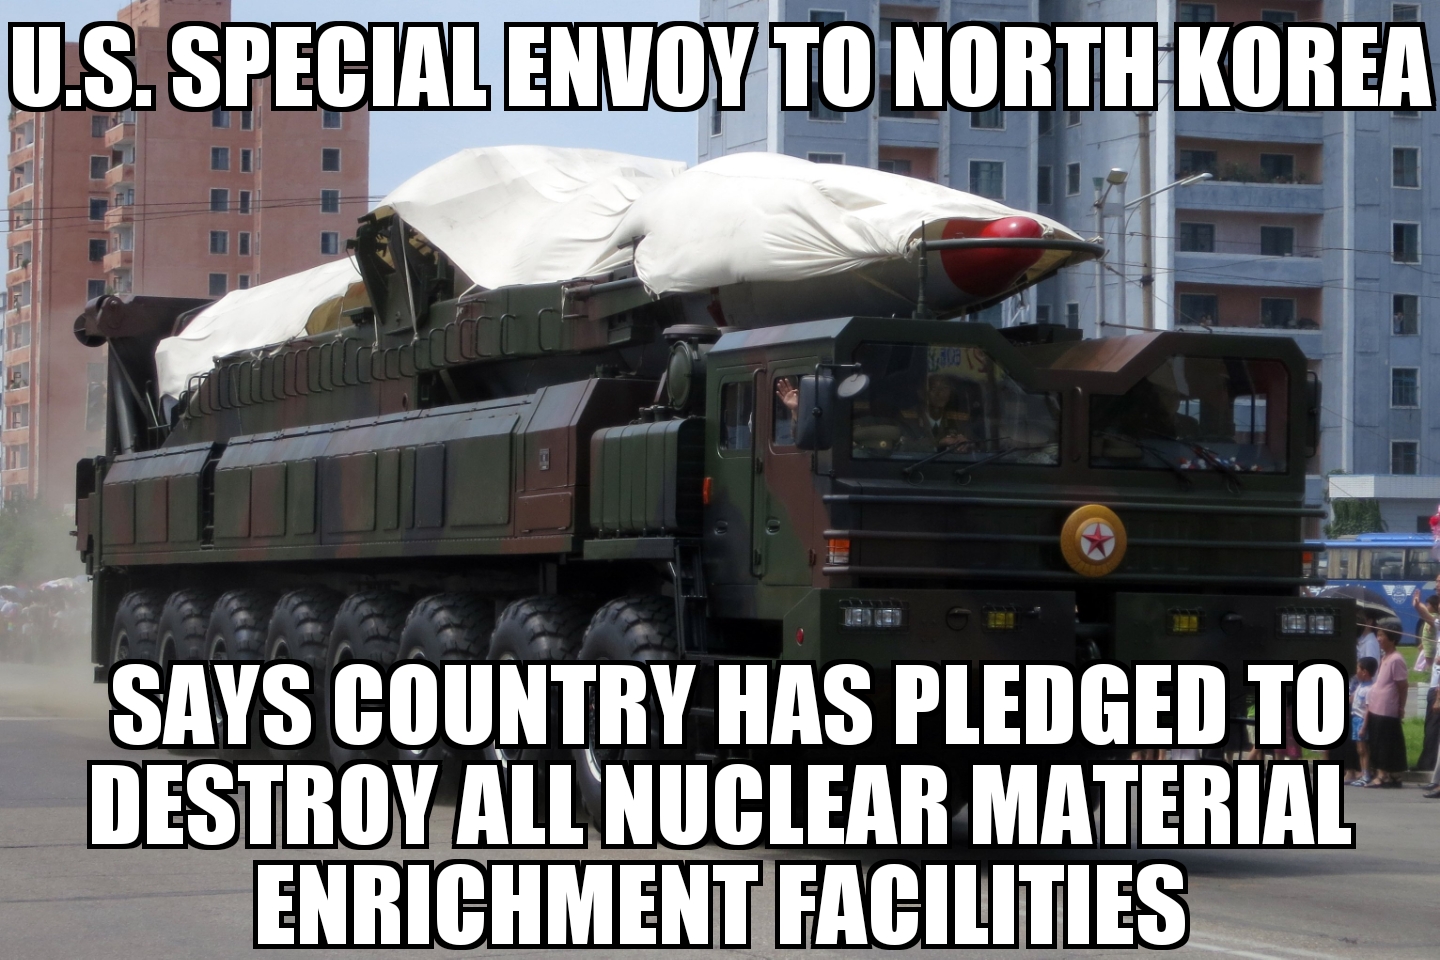 North Korea ‘pledges to destroy nuclear material enrichment facilities’